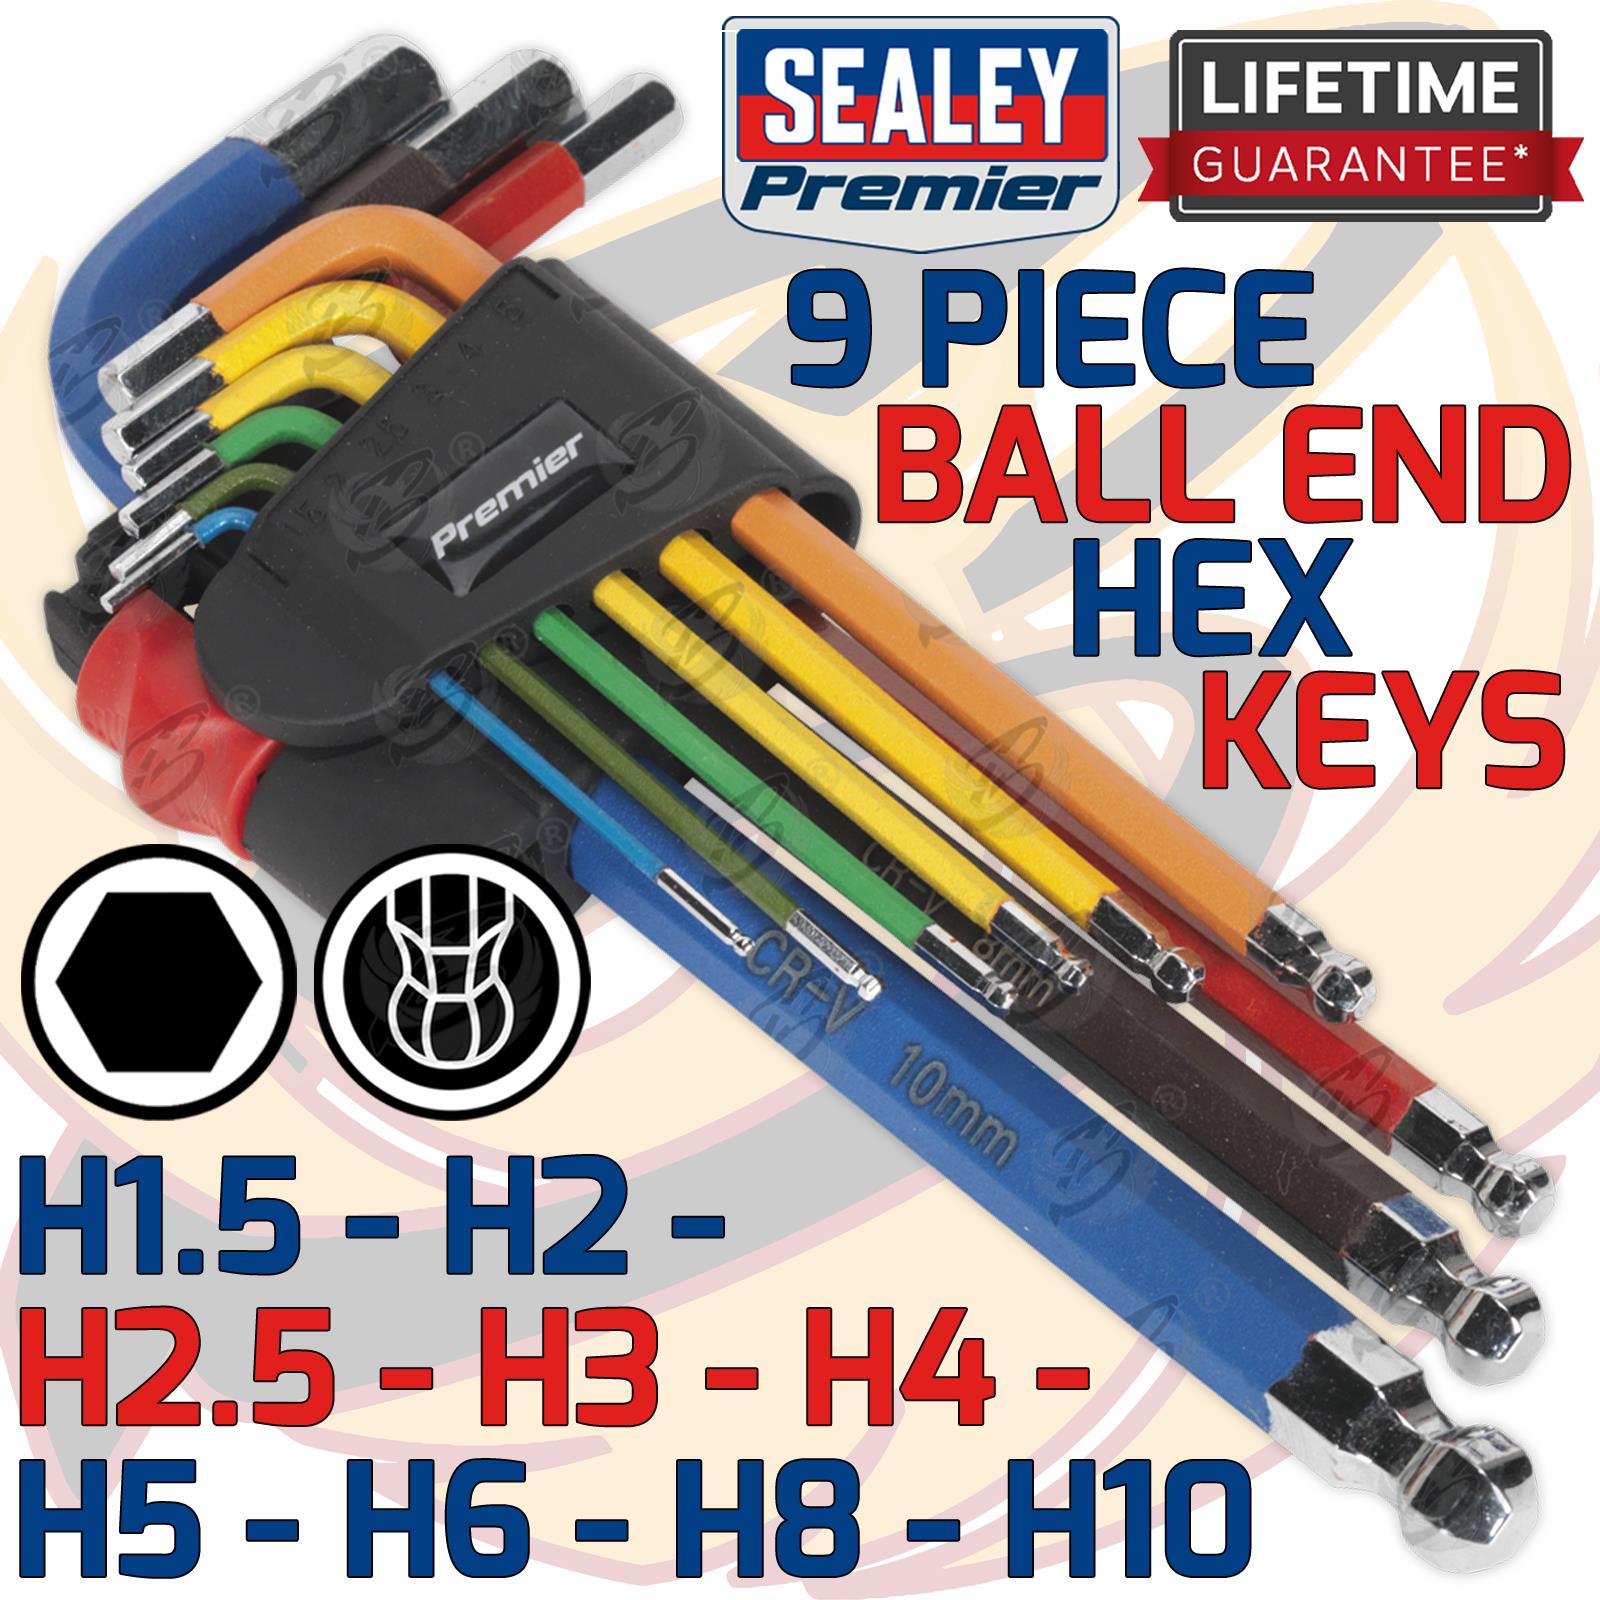 SEALEY 9PCS BALL ENDED HEX KEYS H1.5 - H10